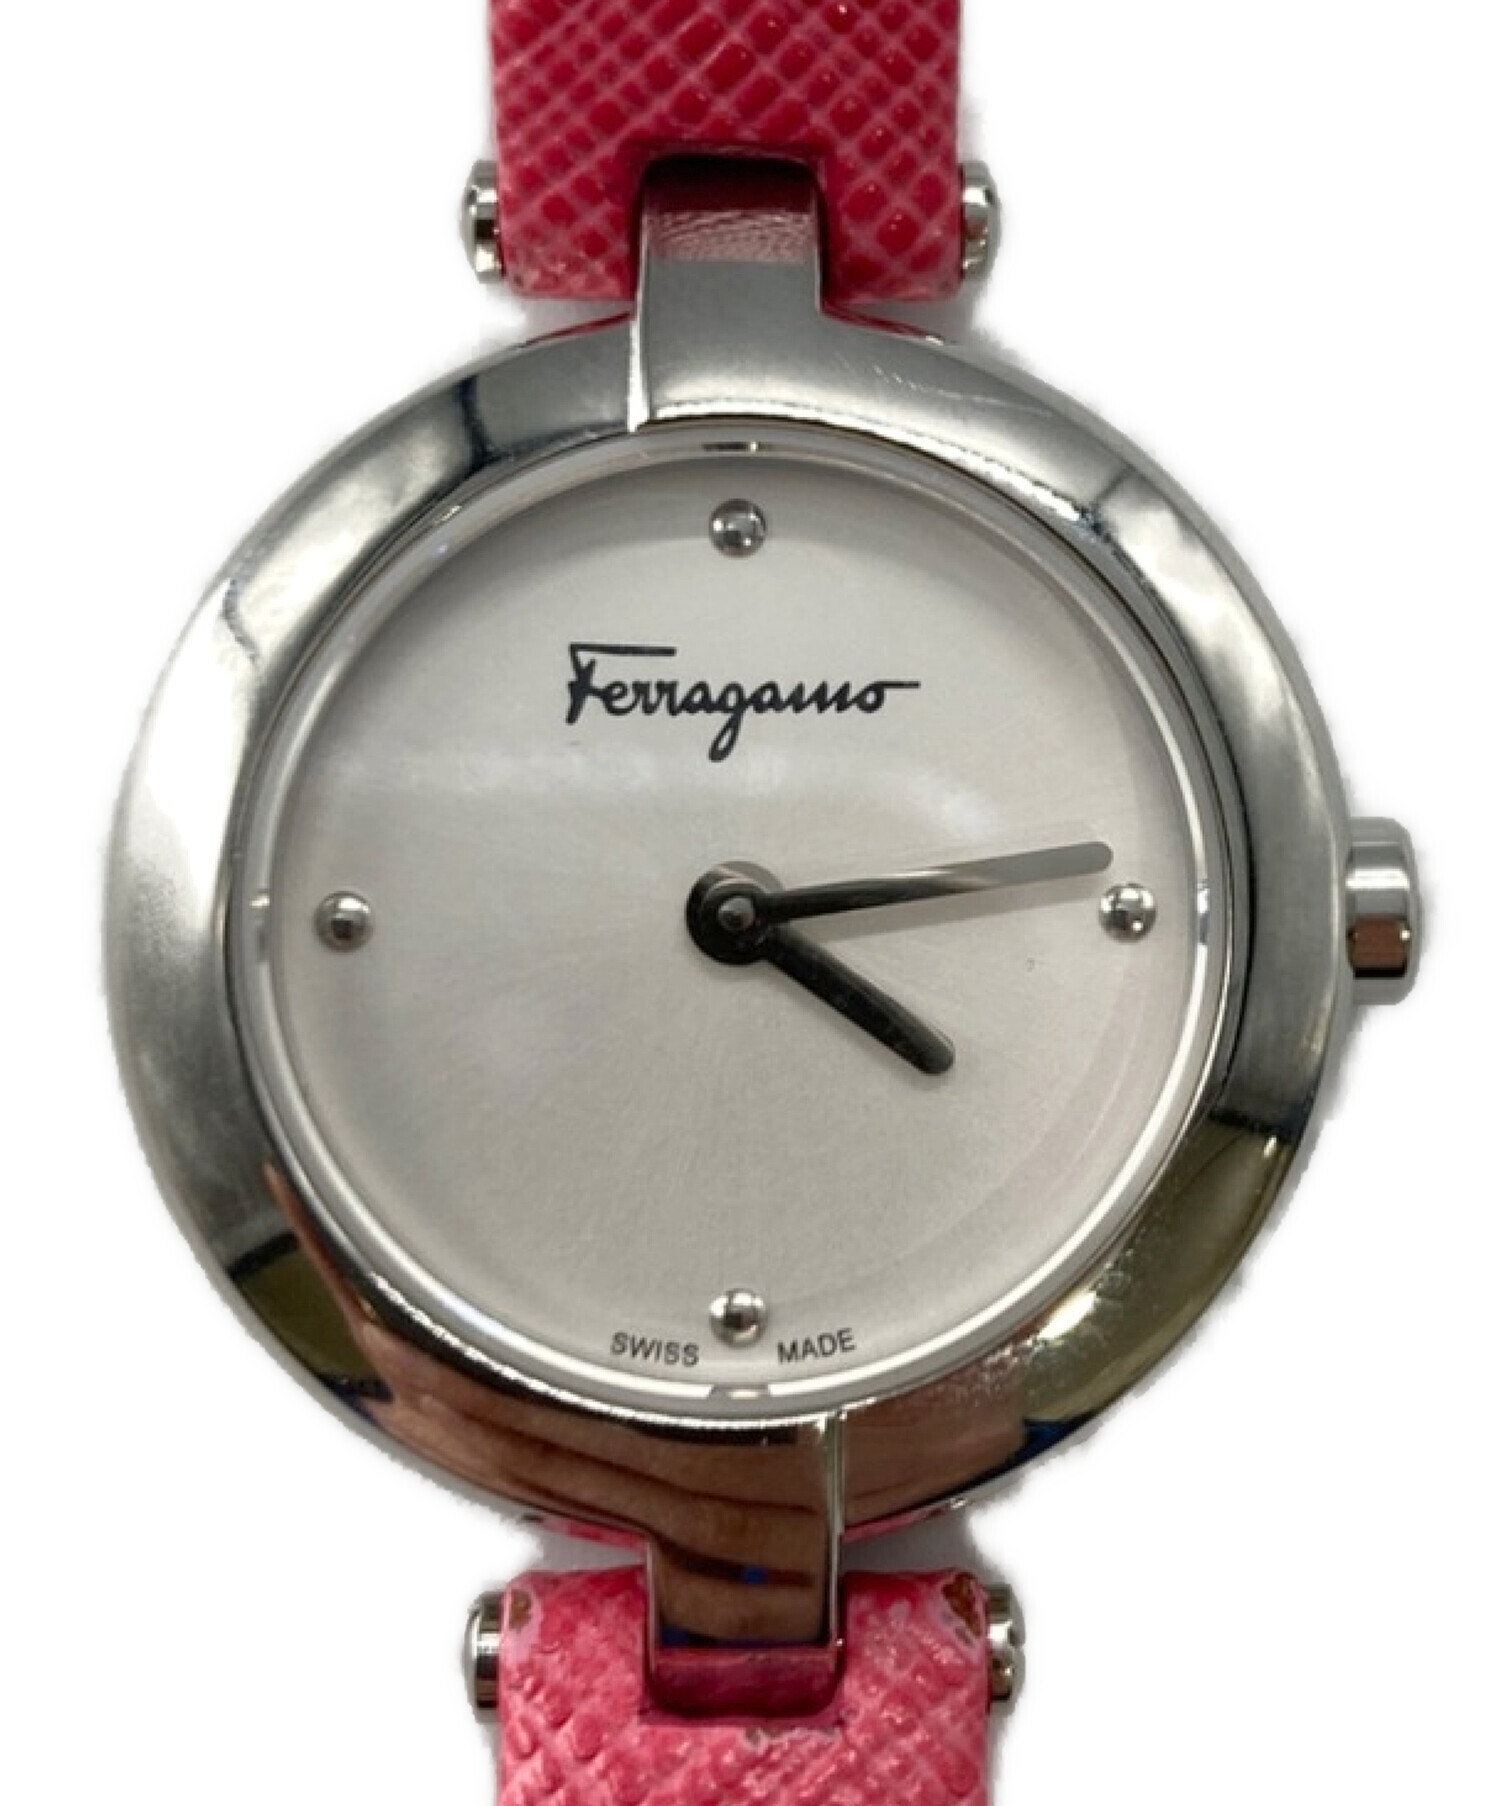 Salvatore Ferragamo (サルヴァトーレ フェラガモ) 腕時計